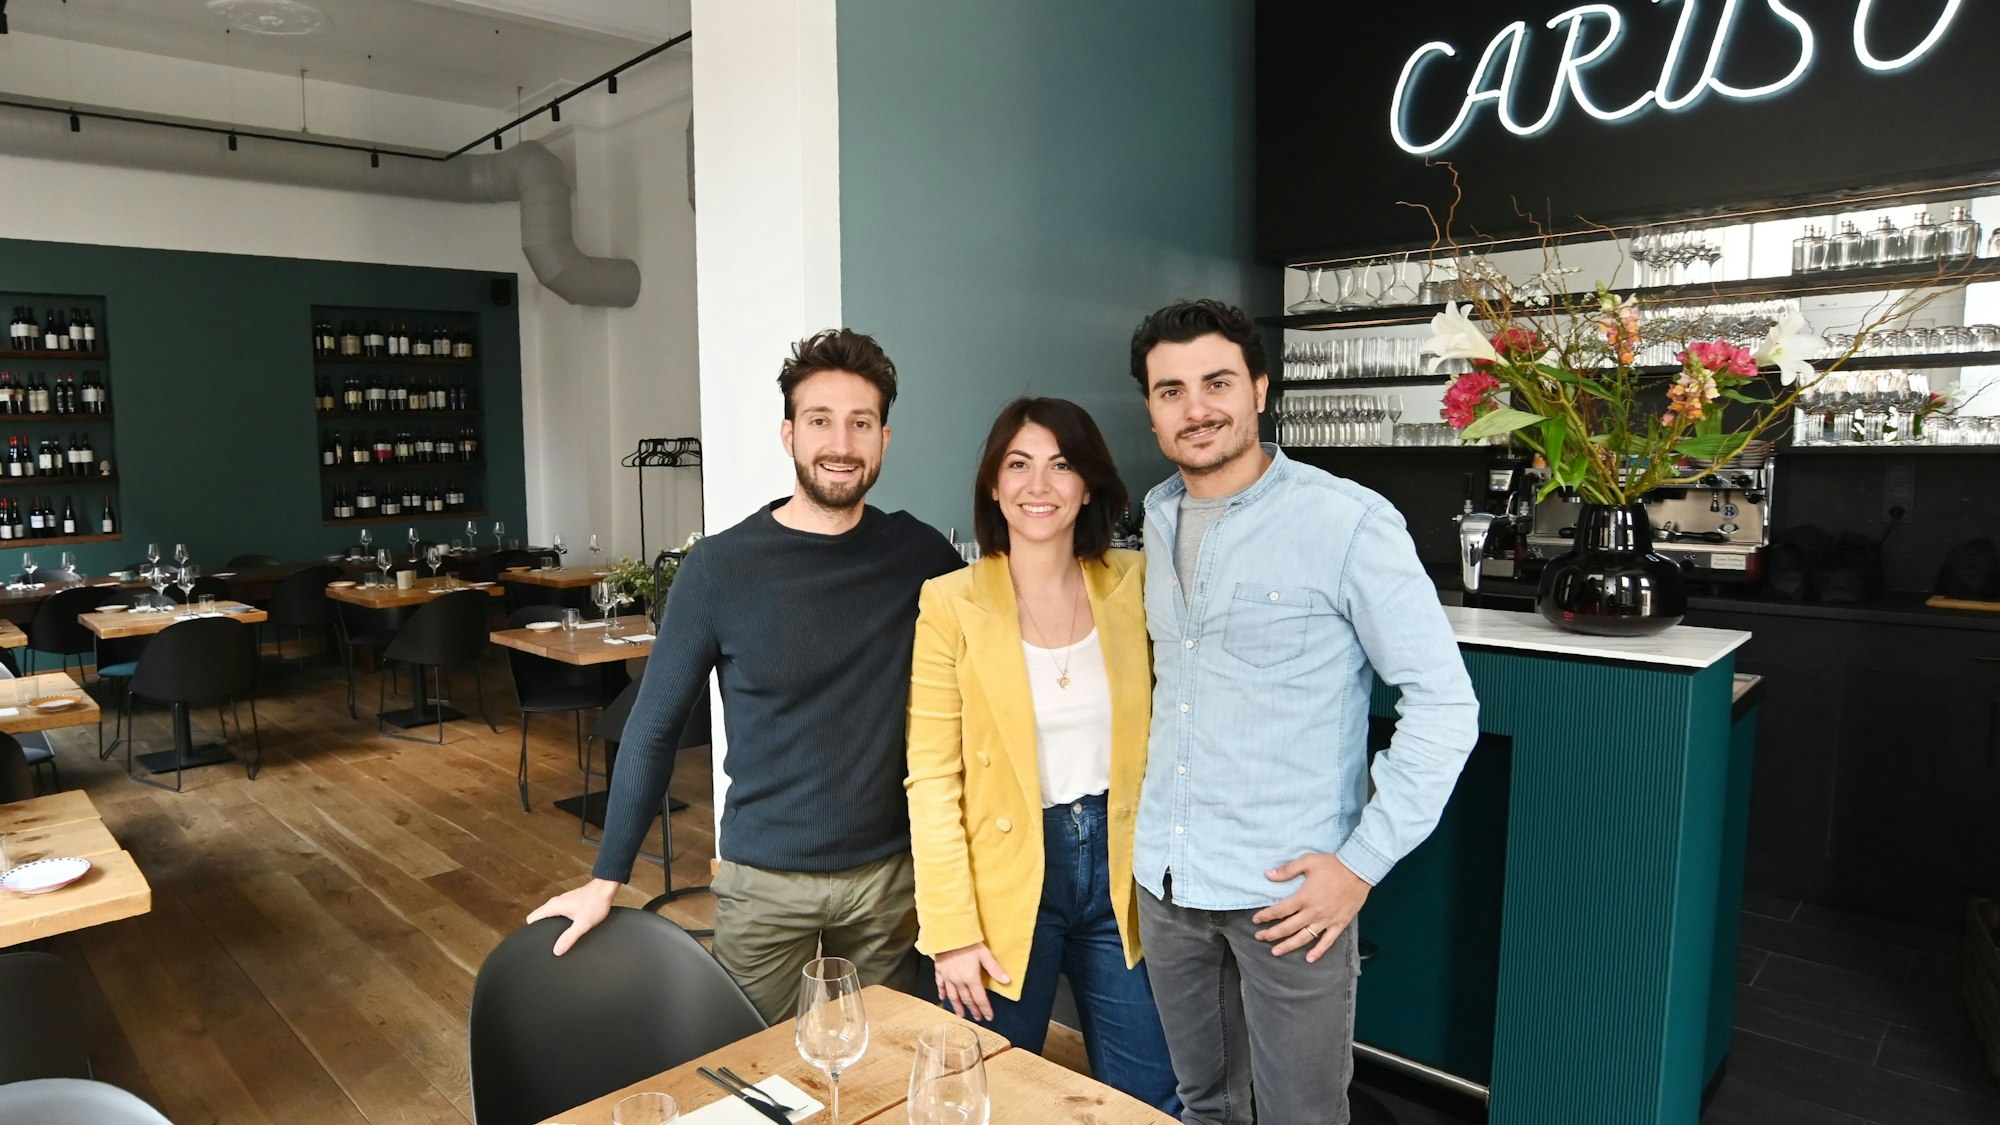 Das Team der Pasta Bar Caruso auf der Kasparstraße. V.Li.: Emanuele Barbaro, Anna Siena, Marcello Caruso.
